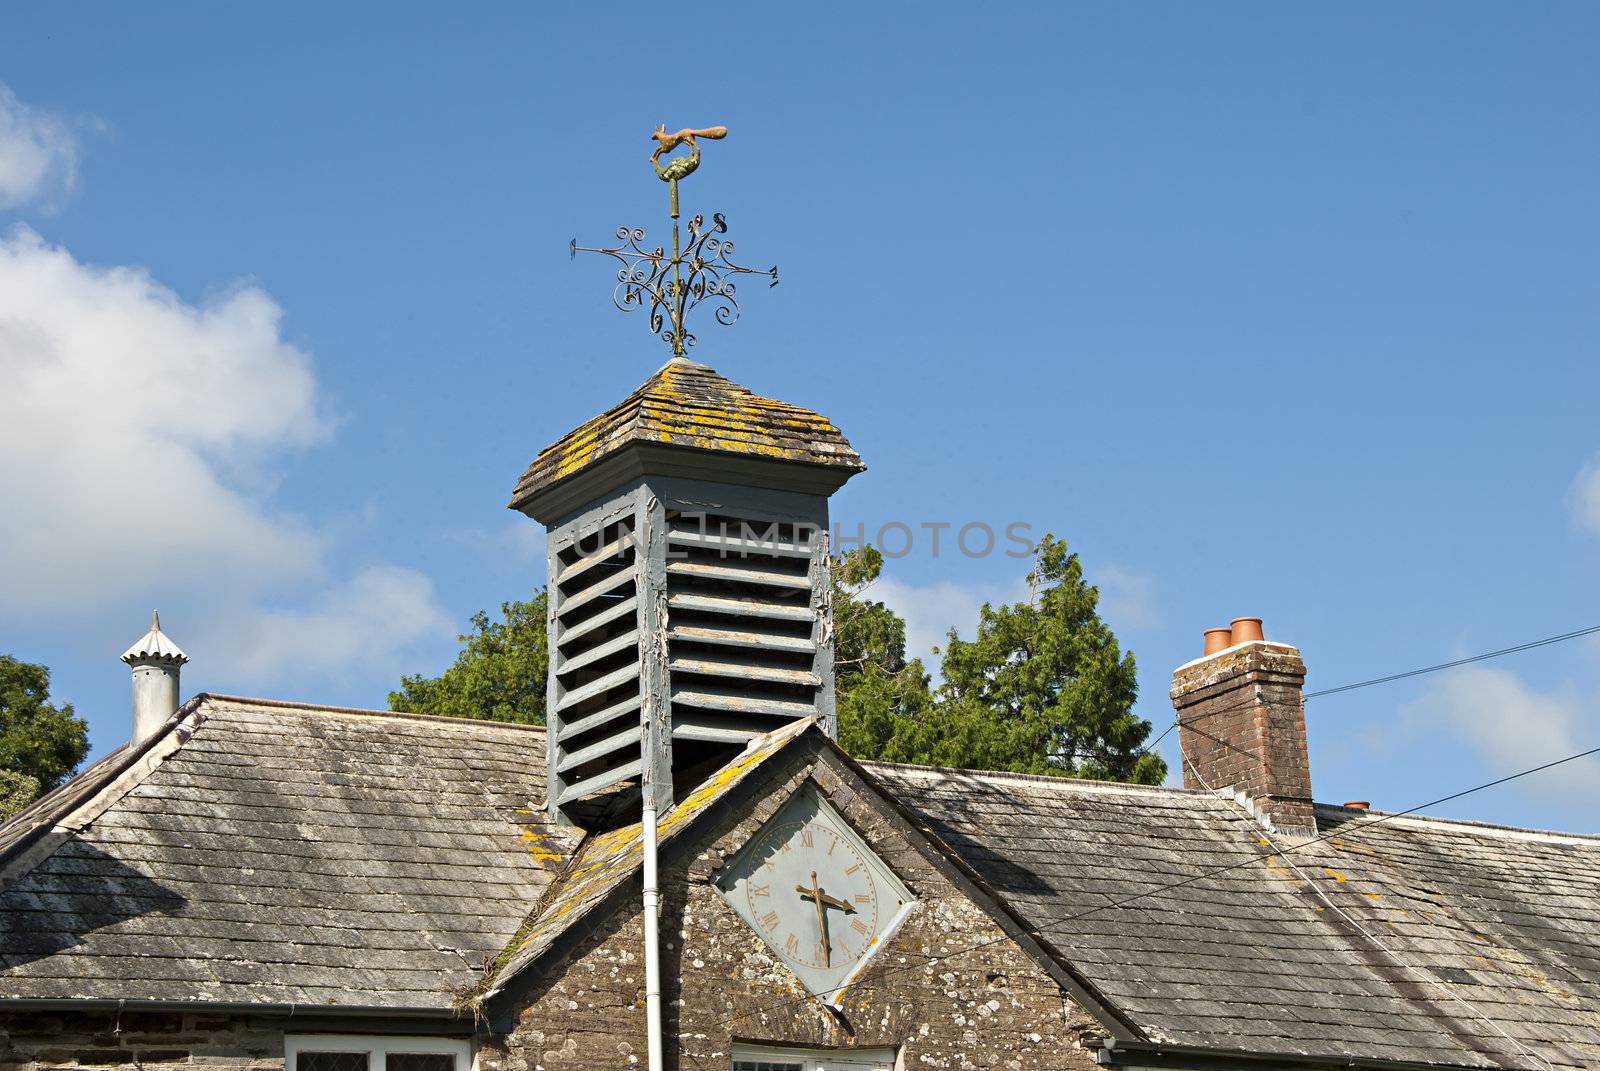 A Fox Weathervane and Clocktower